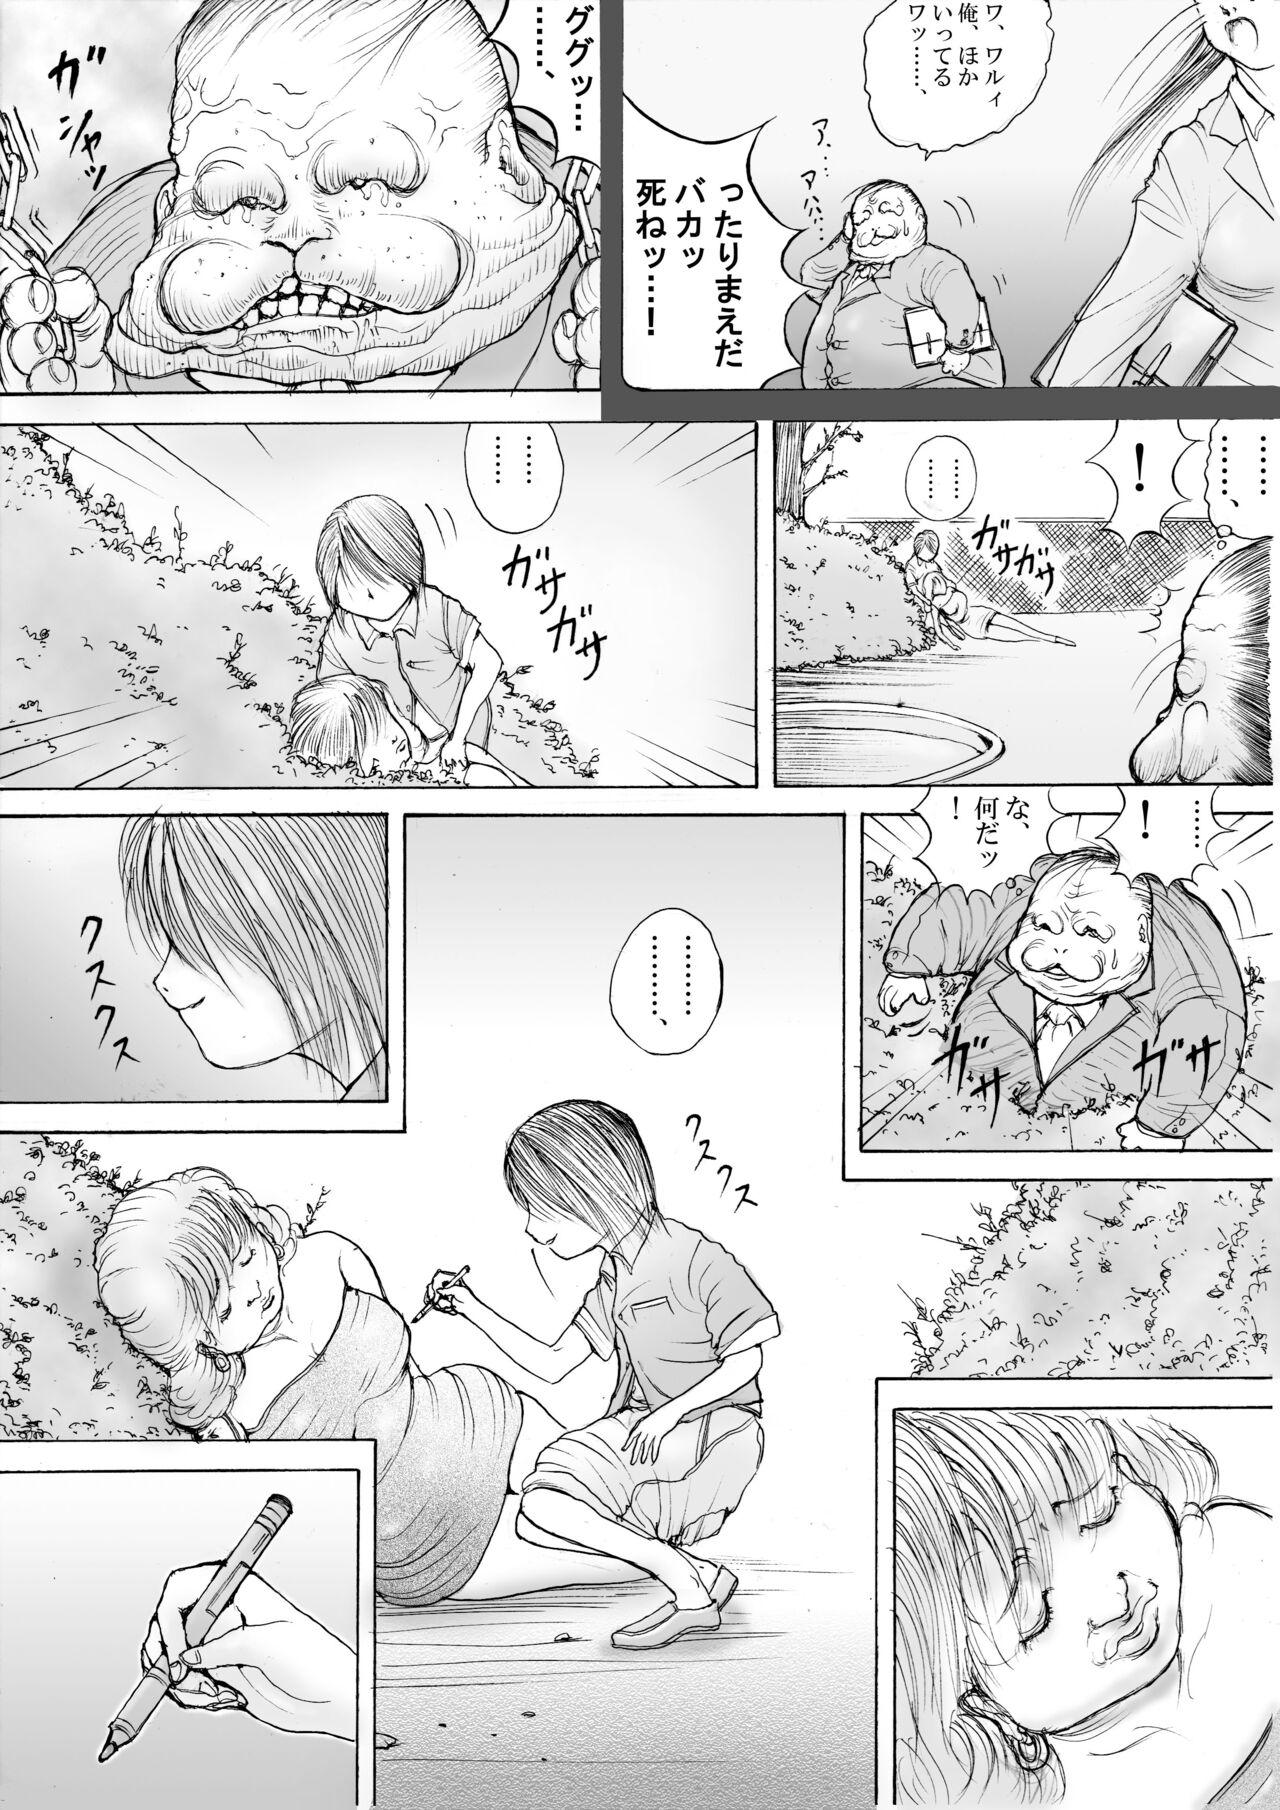 Spy Cam Horror Manga 7 Fucks - Page 2